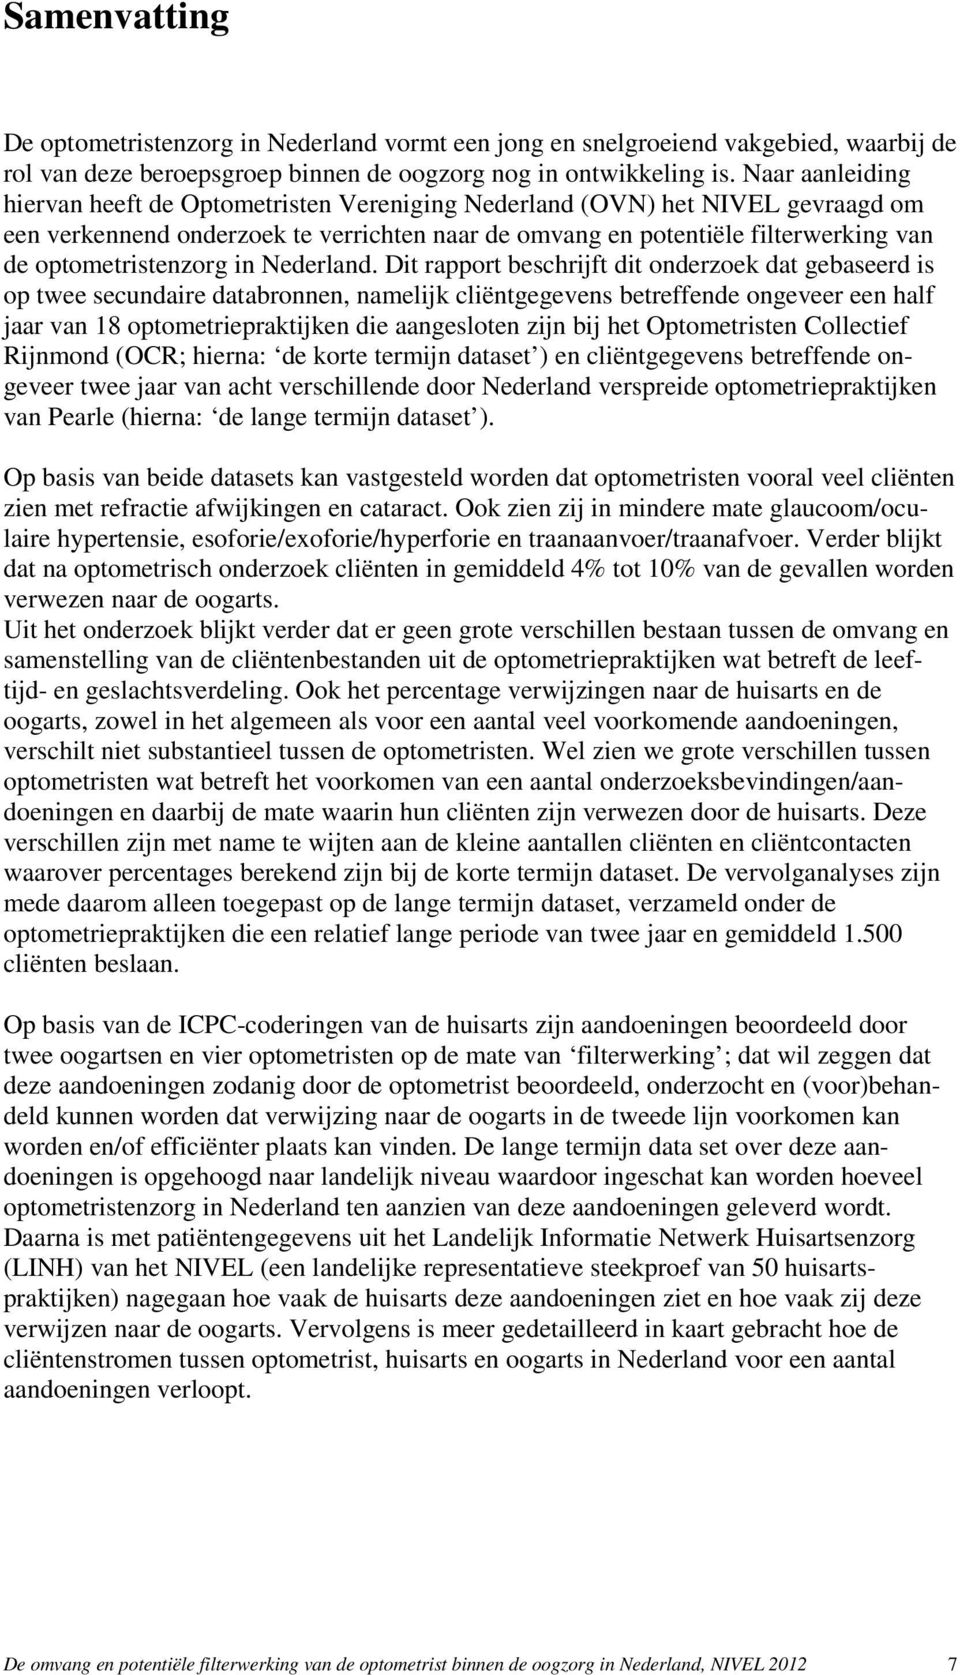 optometristenzorg in Nederland.